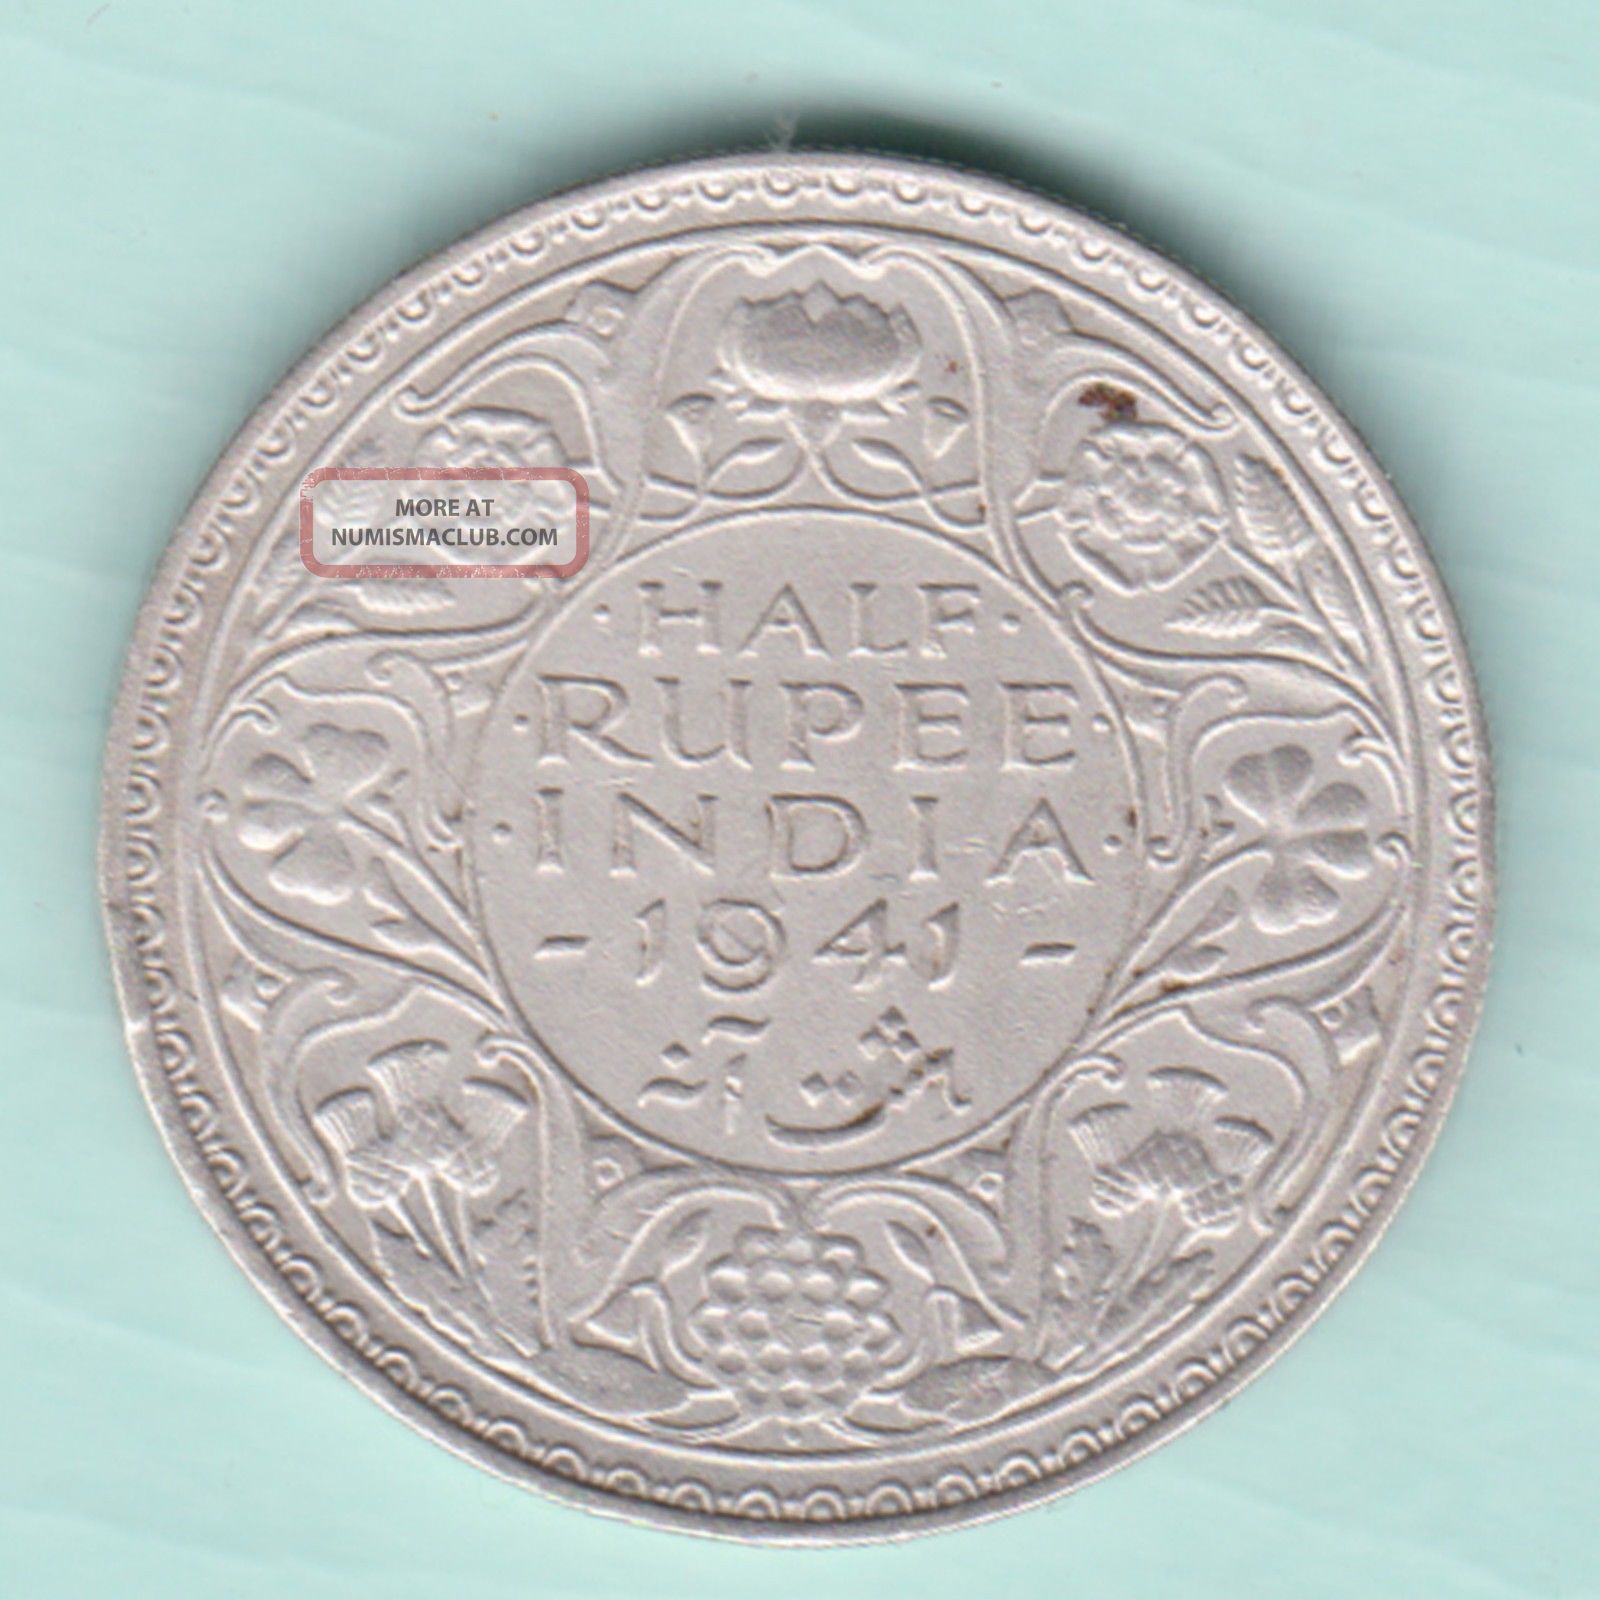 British India - 1941 - King George Vi Emperor - Half Rupee - Rarest Silver Coin British photo